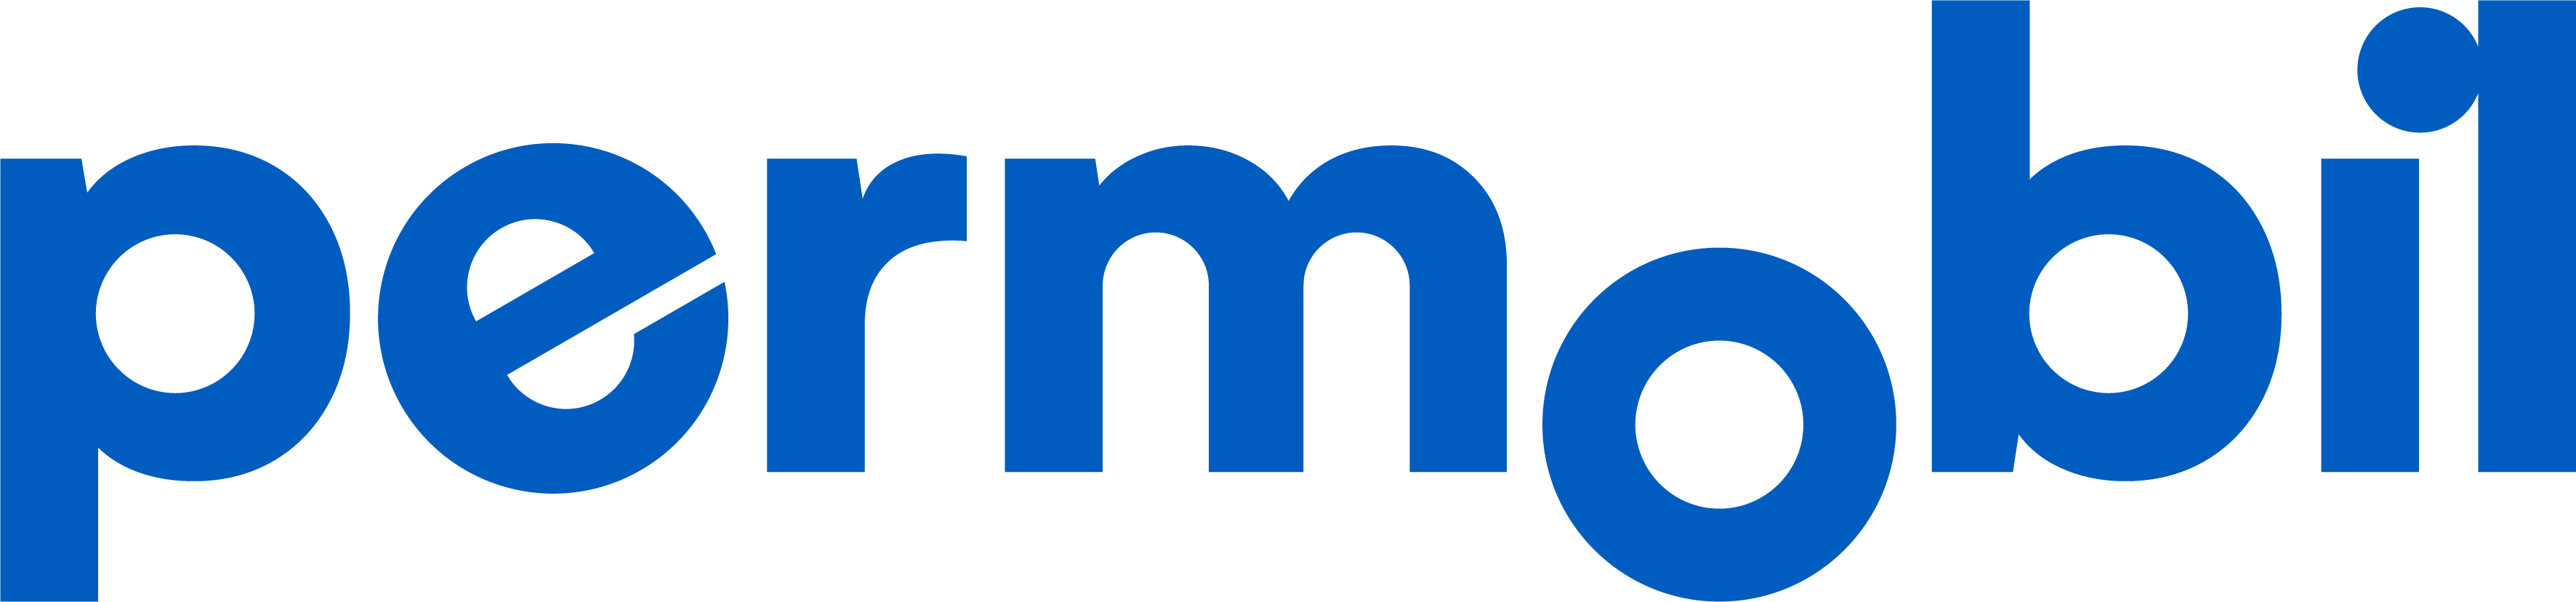 logo Permobil